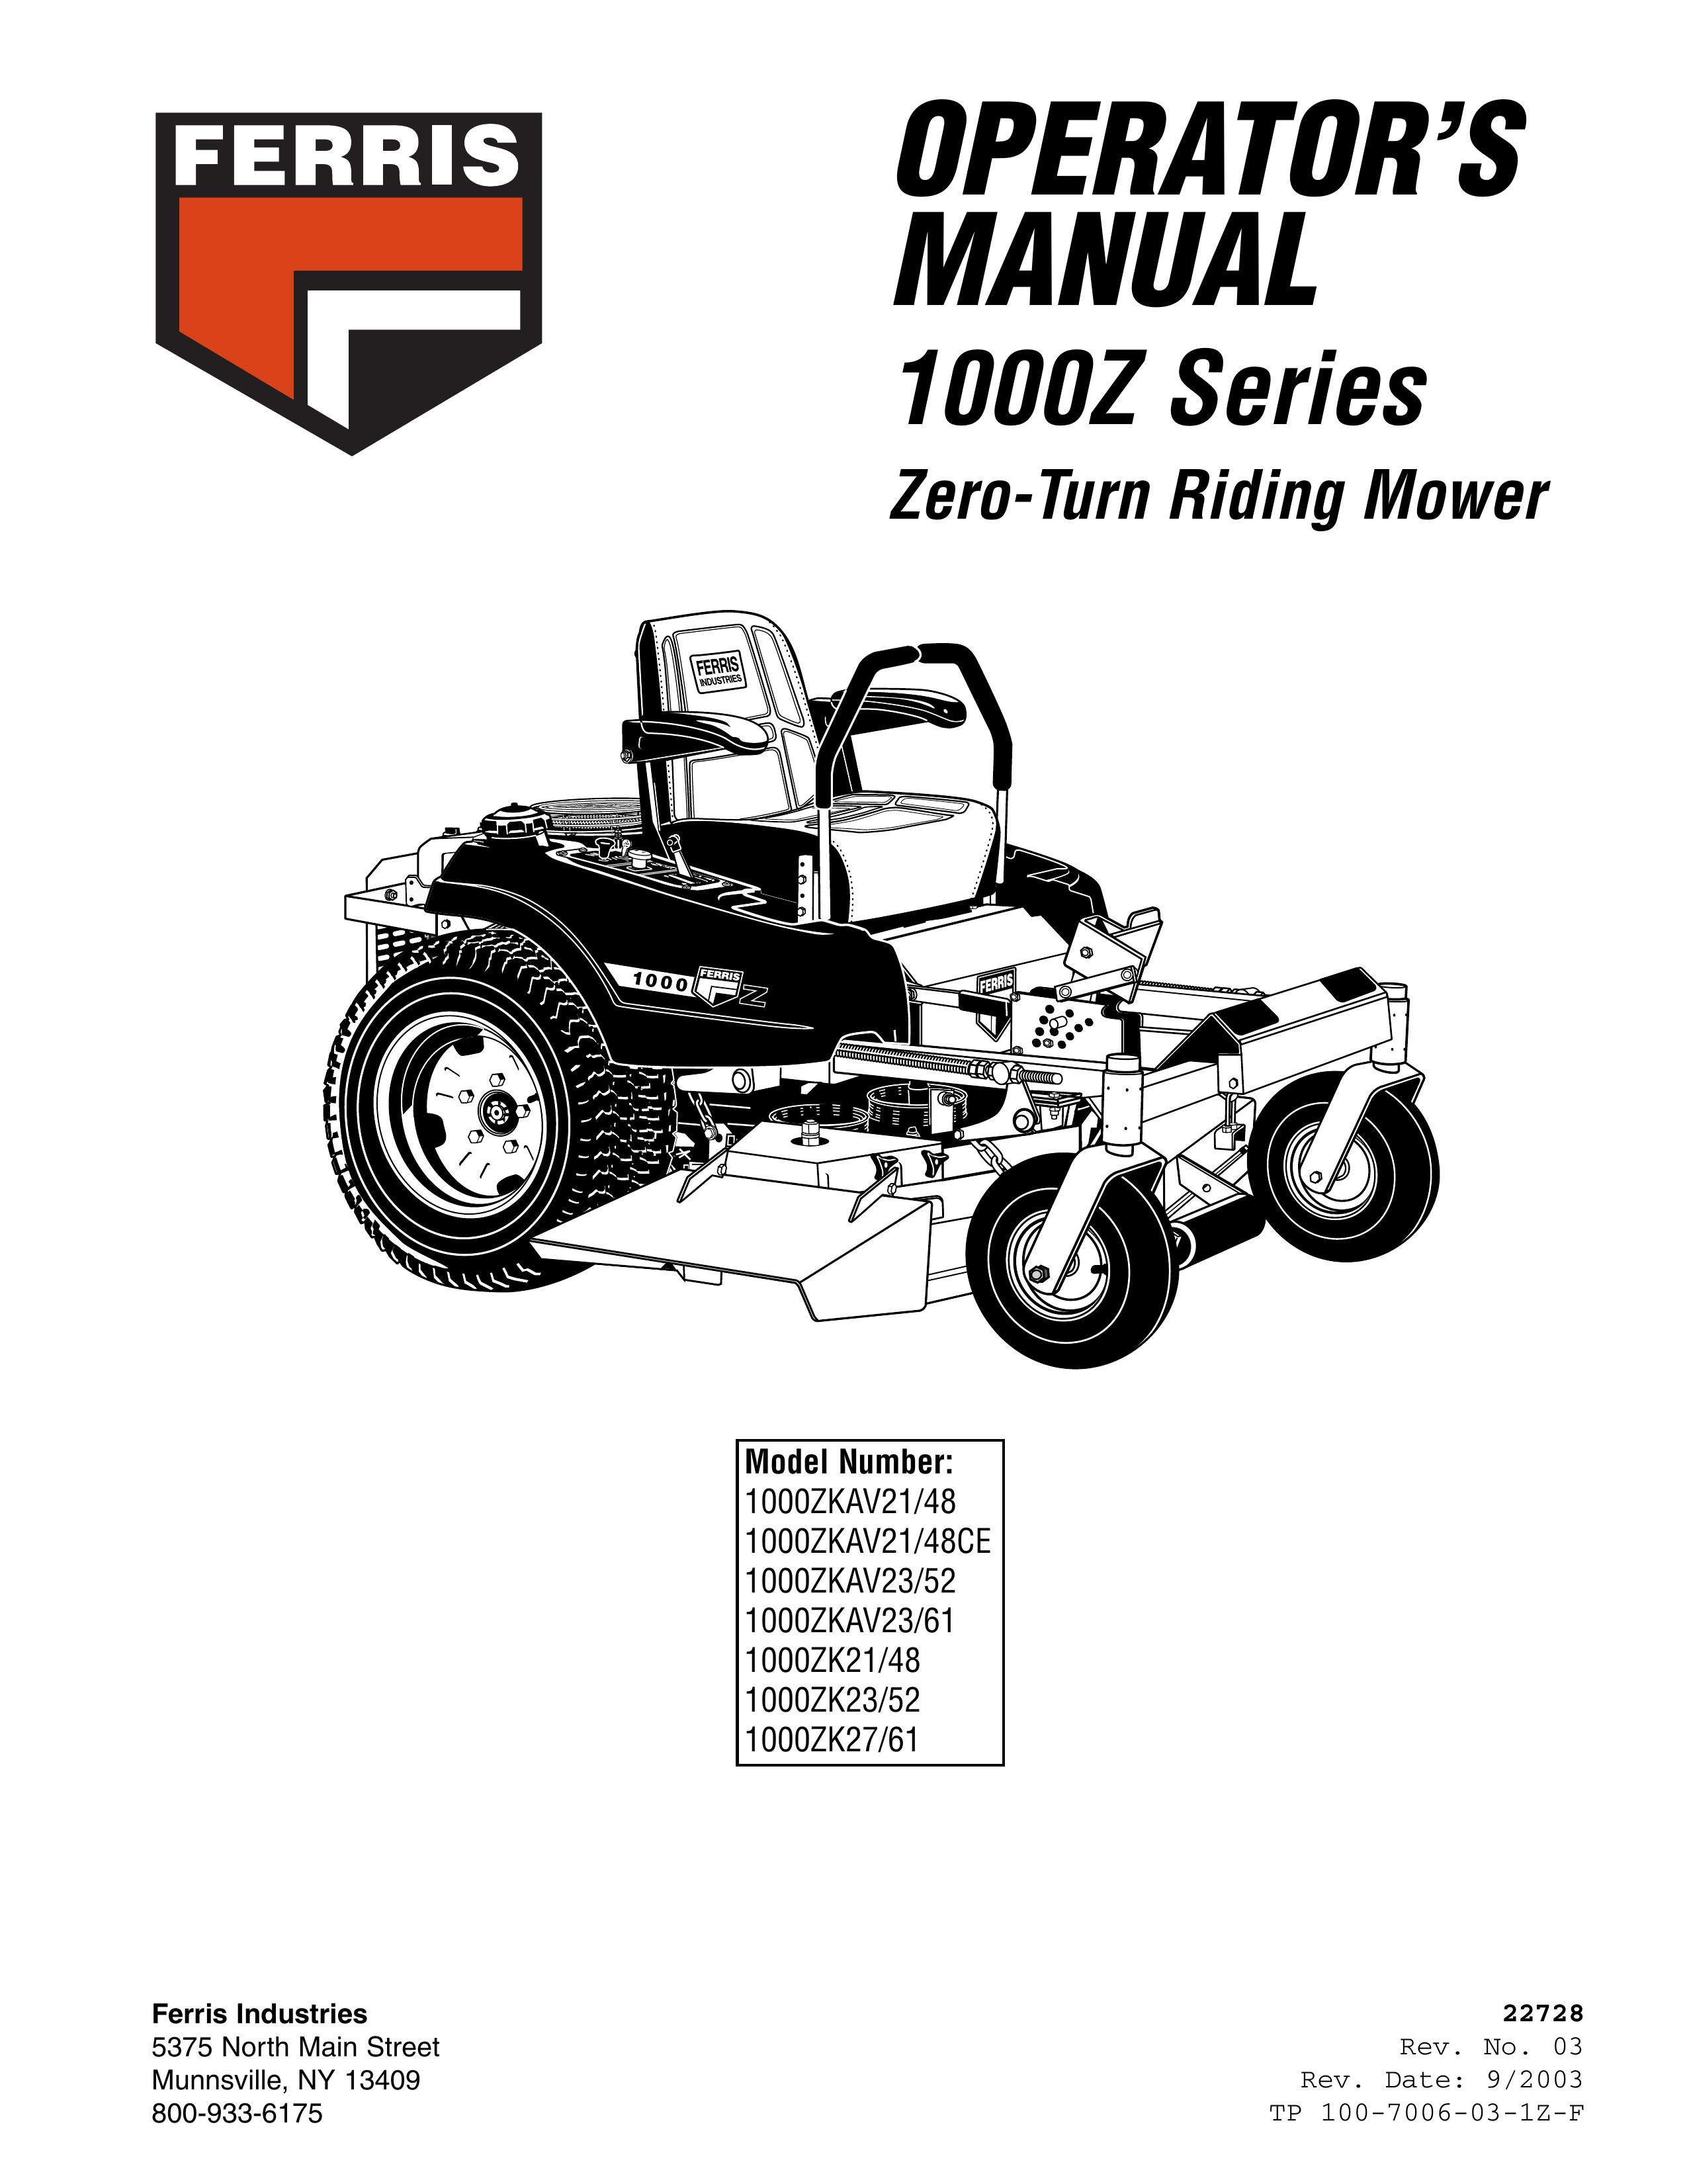 Ferris Industries 1000ZKAV21/48 Lawn Mower User Manual